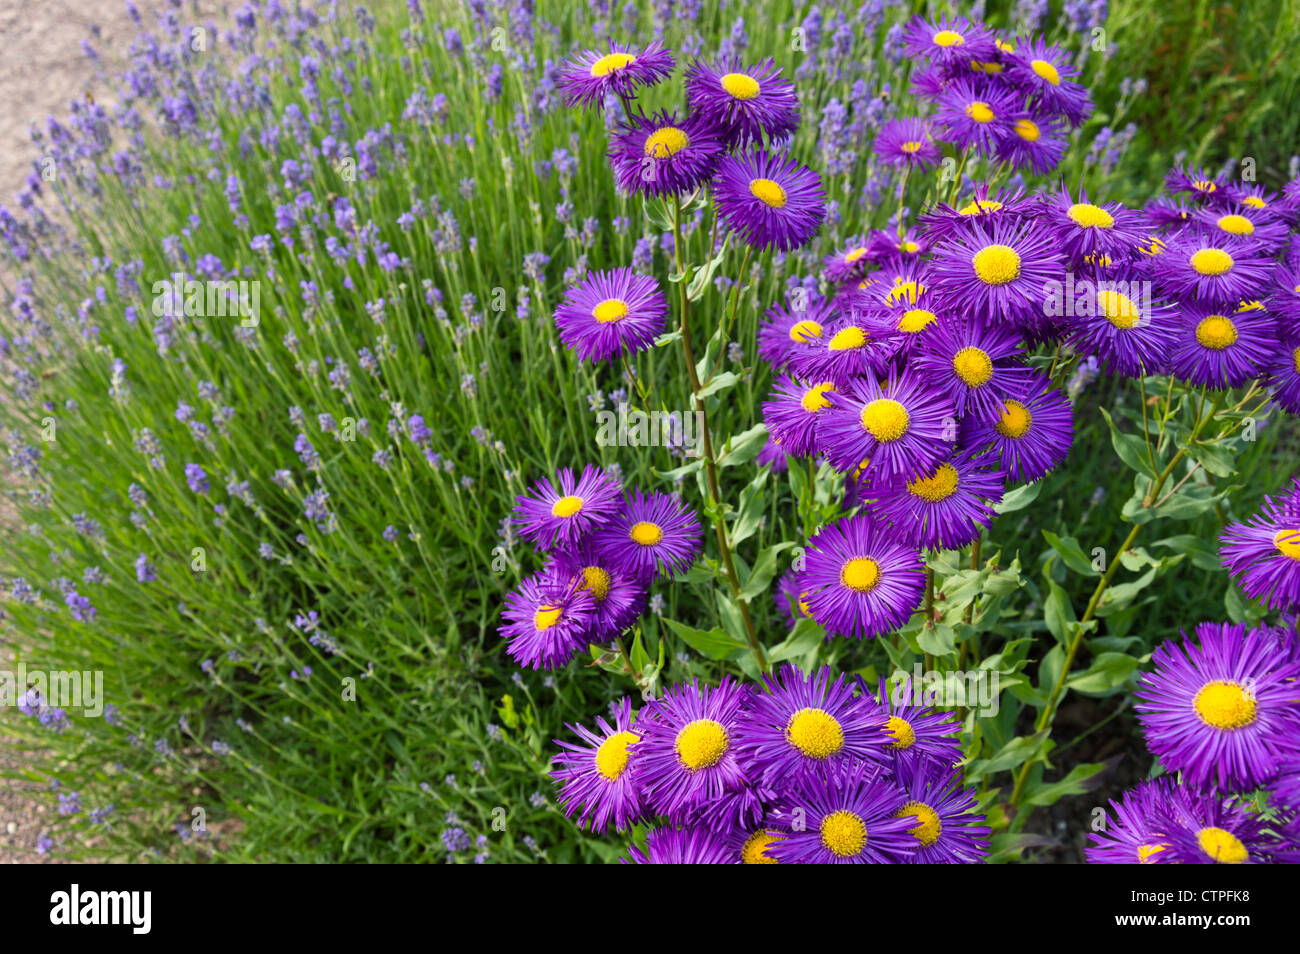 Aspen fleabane (Erigeron speciosus 'Dominator') and common lavender (Lavandula angustifolia) Stock Photo